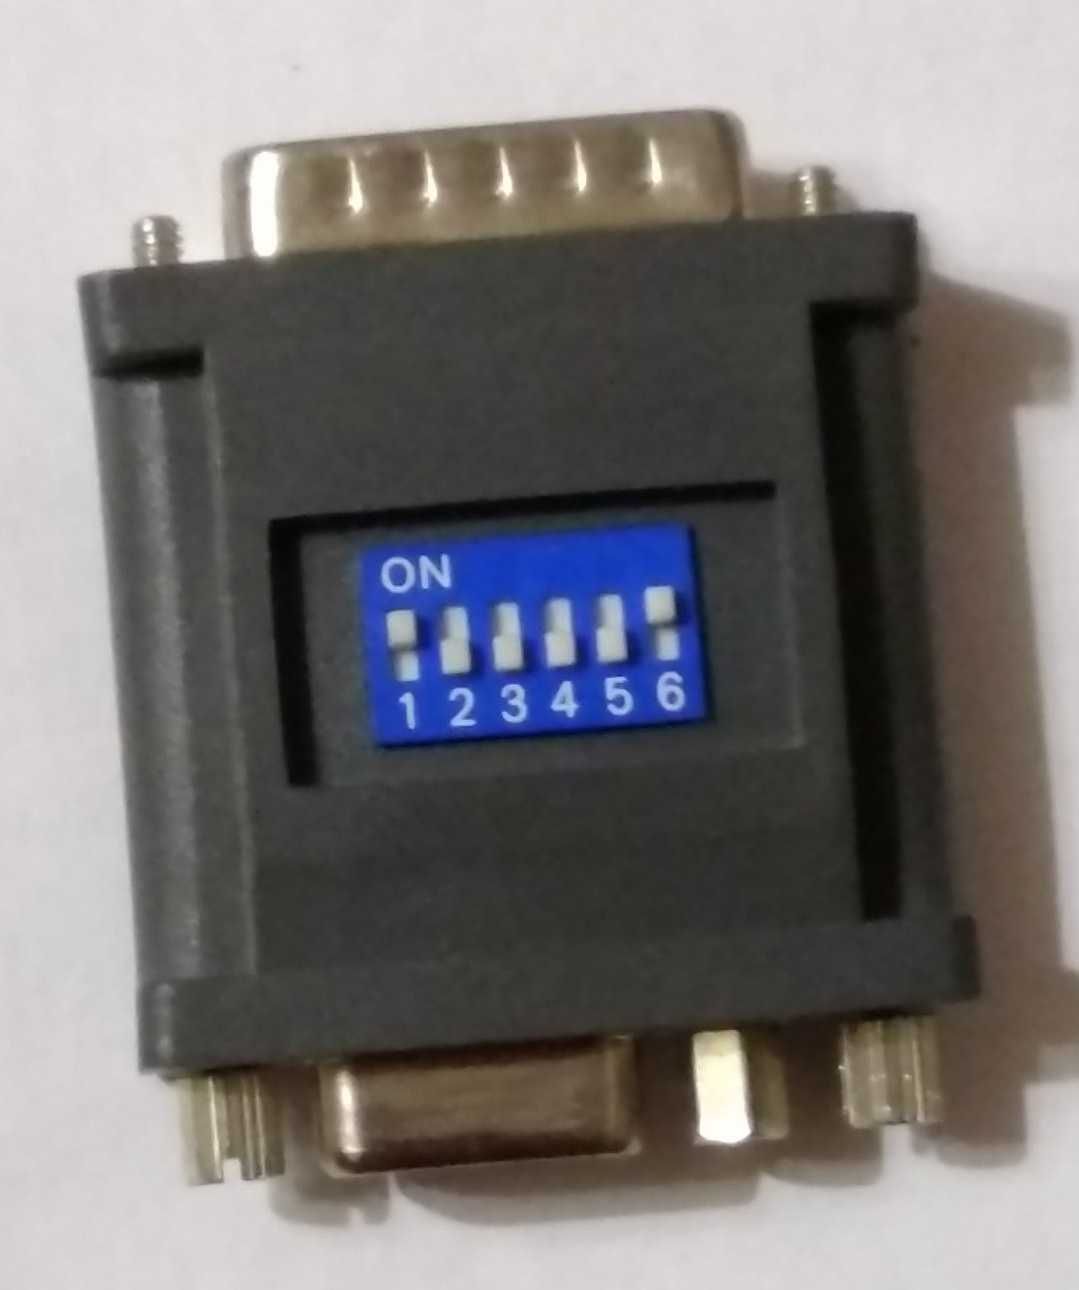 Переходник SVGA 15 Pin с переключателями